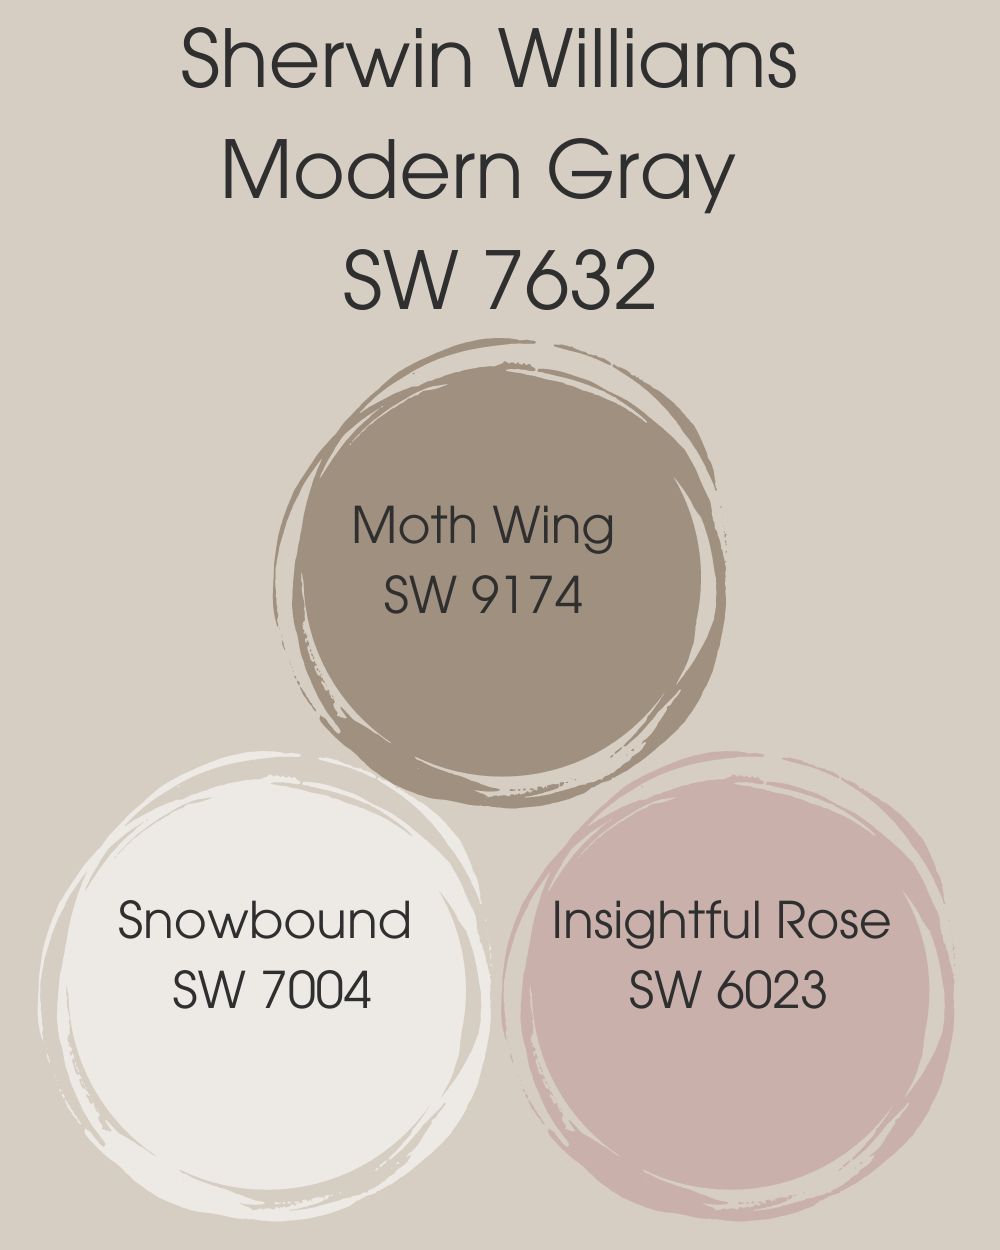 Modern Gray SW 7632